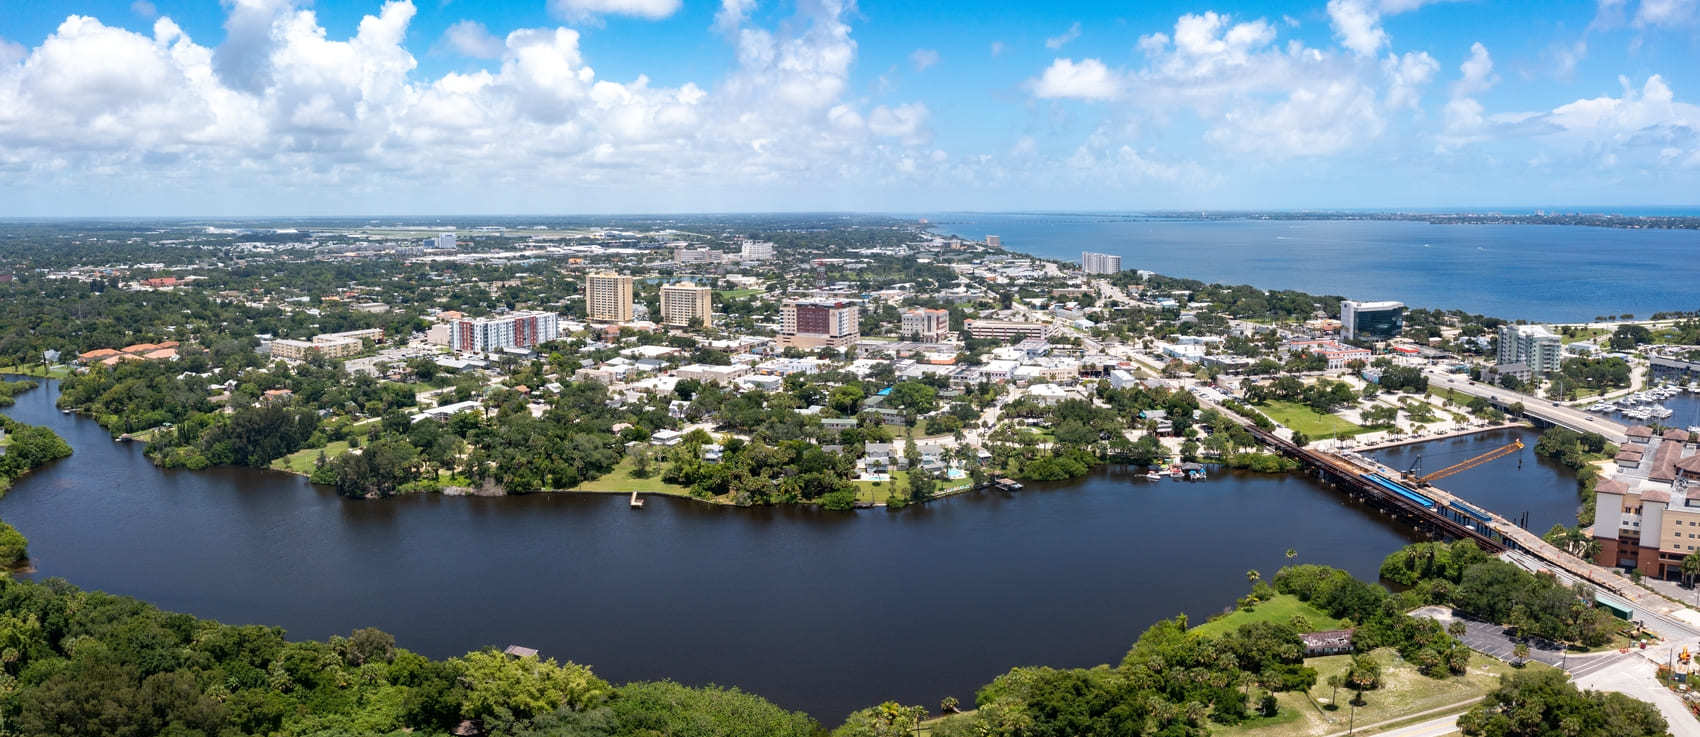 Melbourne Florida Aerial View